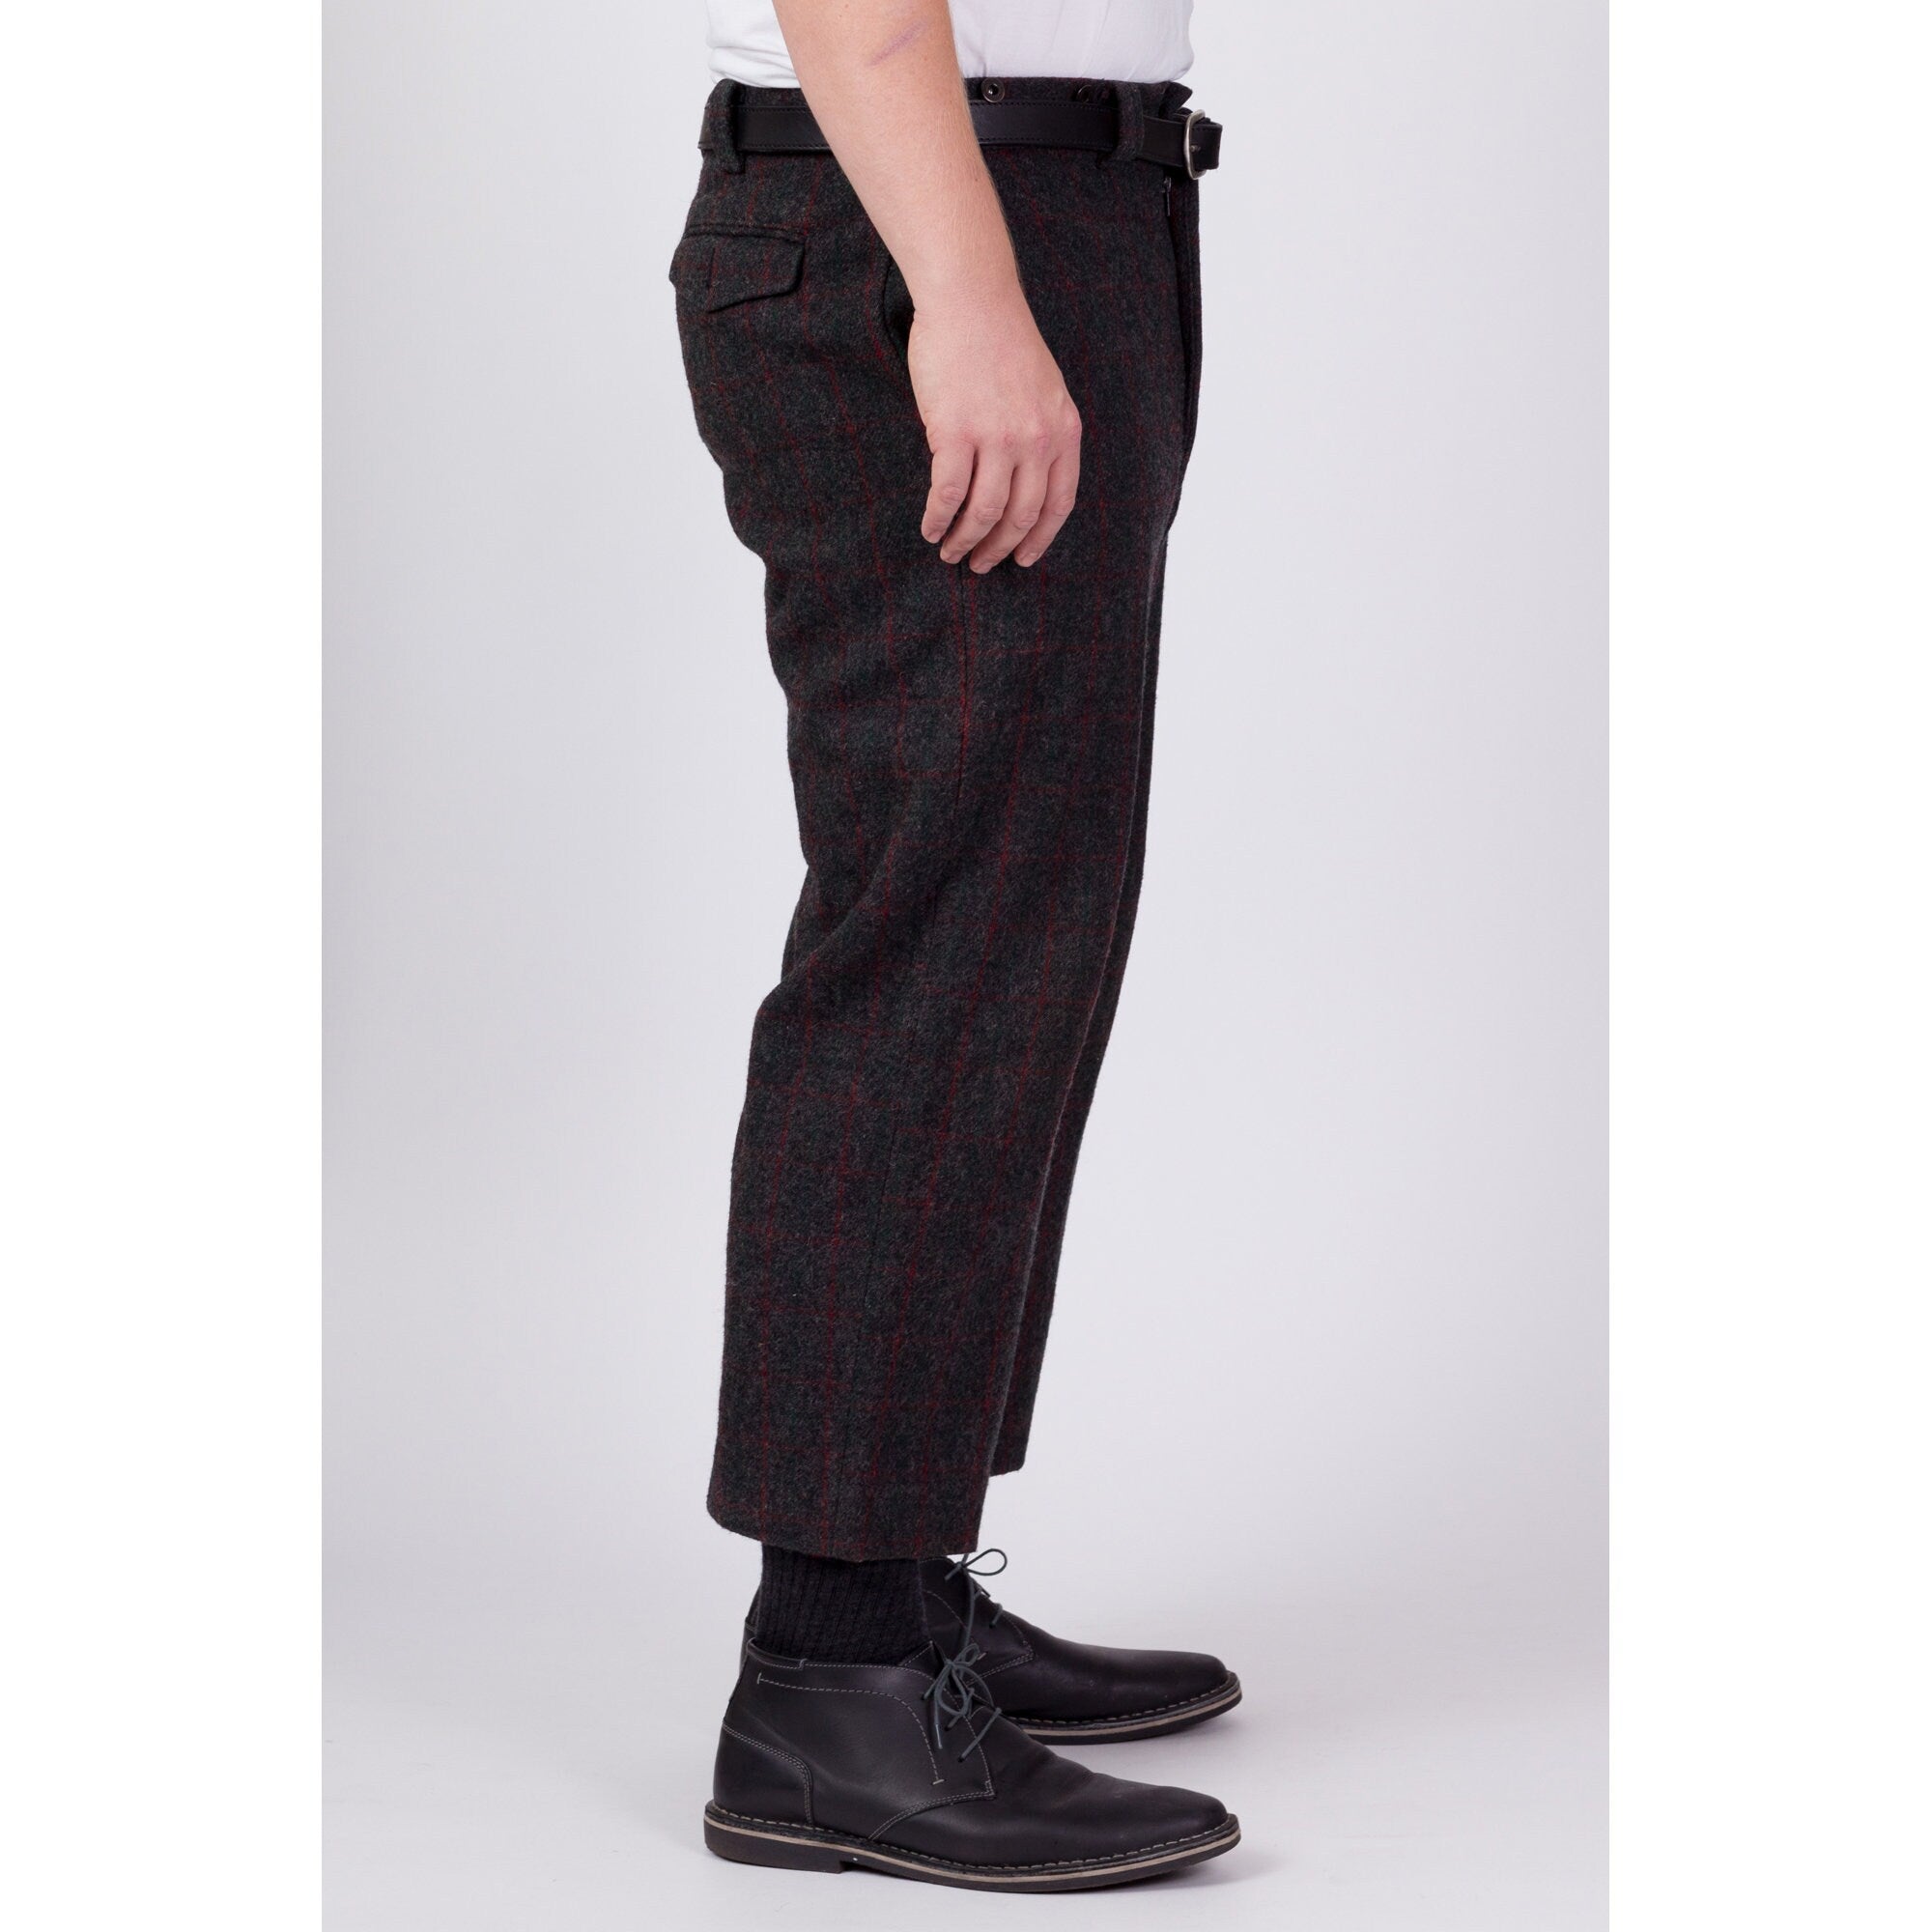 HAORUN Men Corduroy Bell Bottom Flares Pants Slim Fit 60s 70s Vintage  Bootcut Trousers - Walmart.com